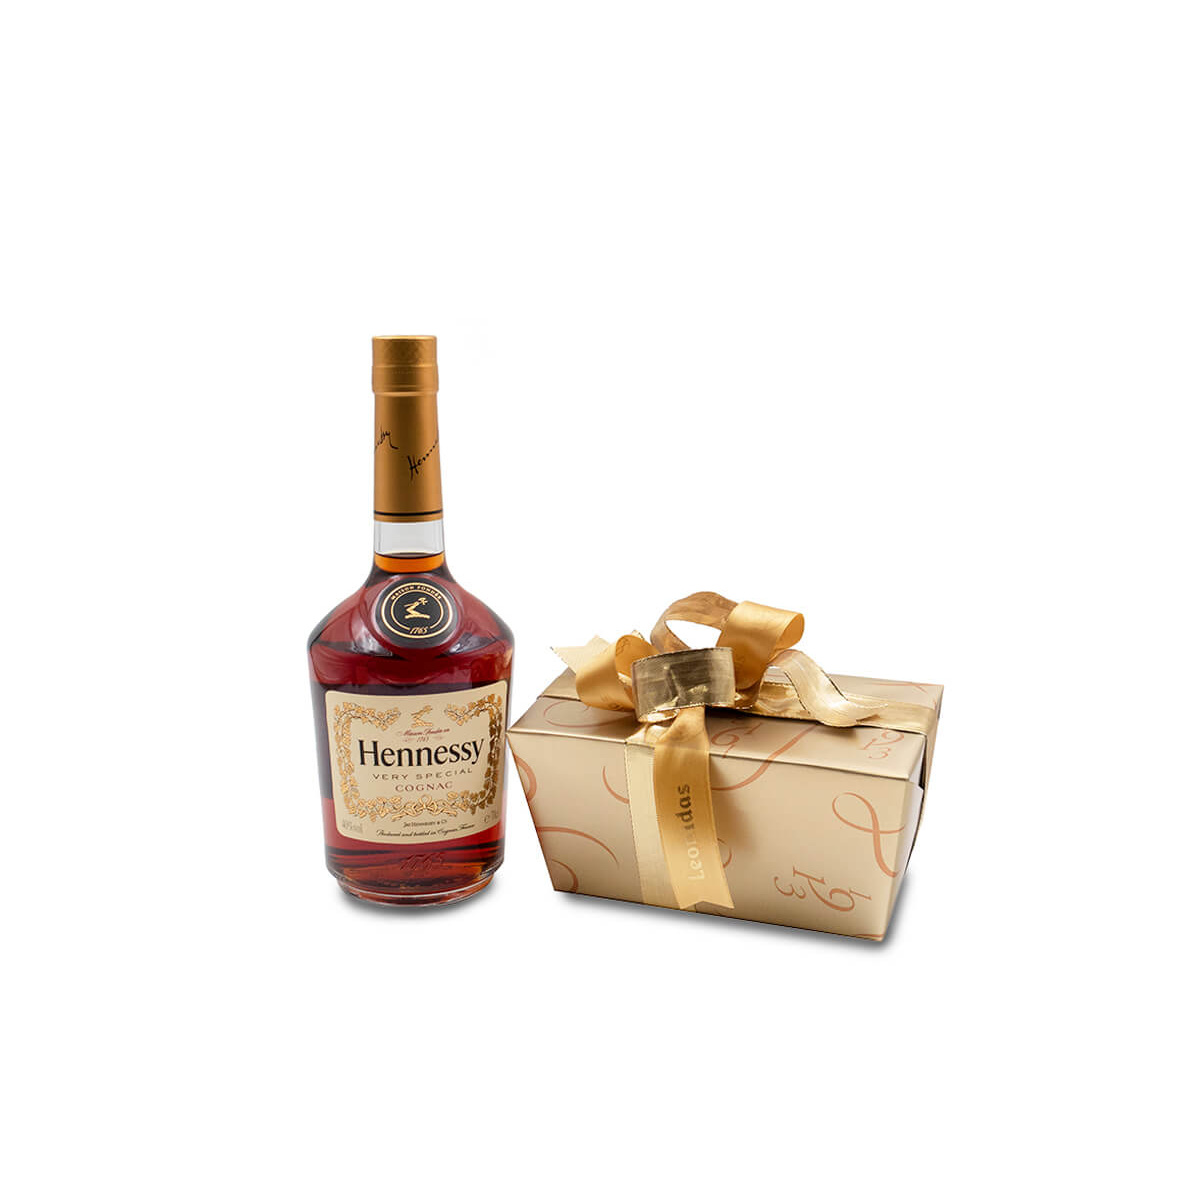 750g ποικιλία σοκολατάκια Leonidas και 1 φιάλη κονιάκ “Hennessy” V.S. 70cl